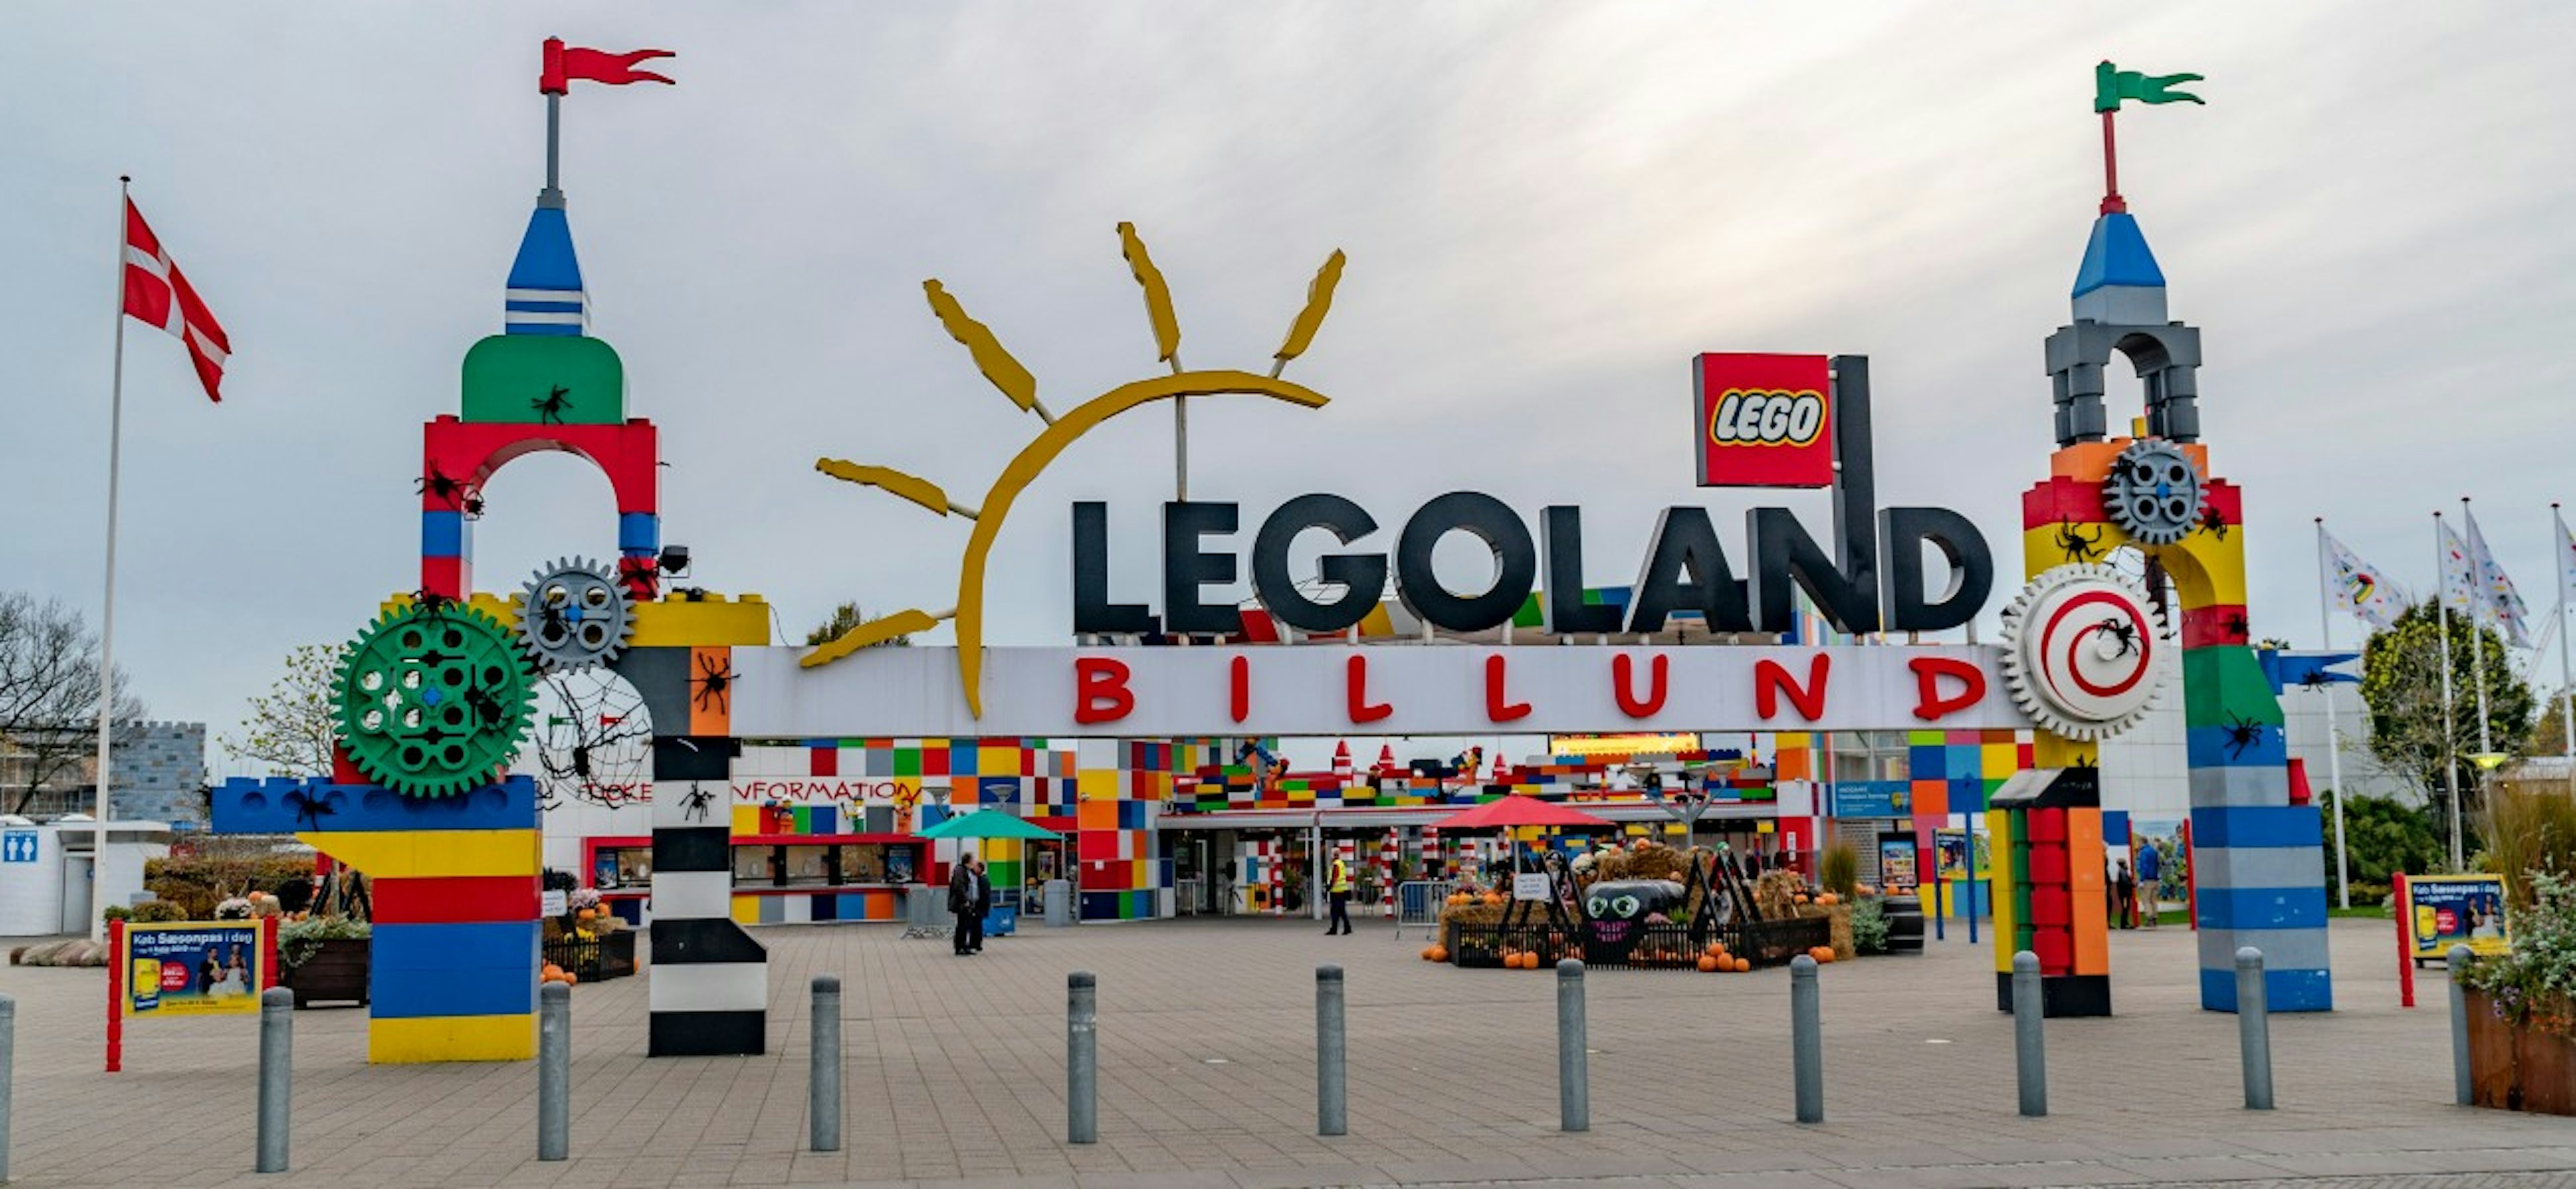 Billund Denmark, Legoland amusement park, entrance of park